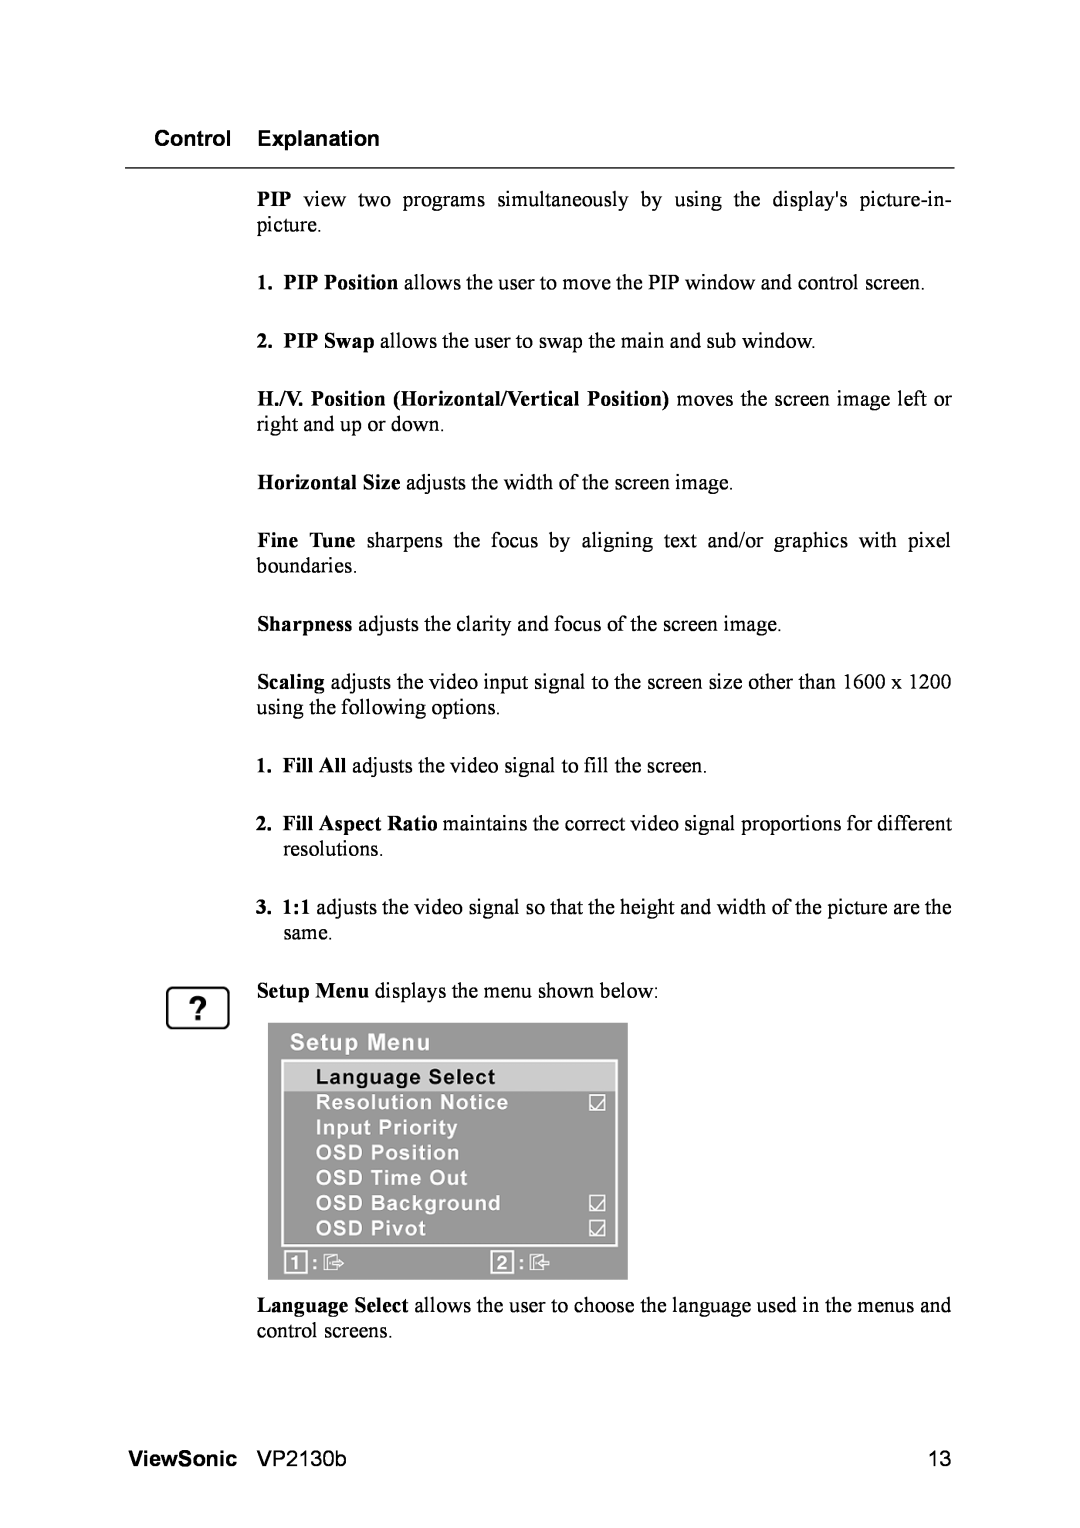 ViewSonic VP2130B manual Control Explanation, Setup Menu displays the menu shown below, ViewSonic VP2130b 